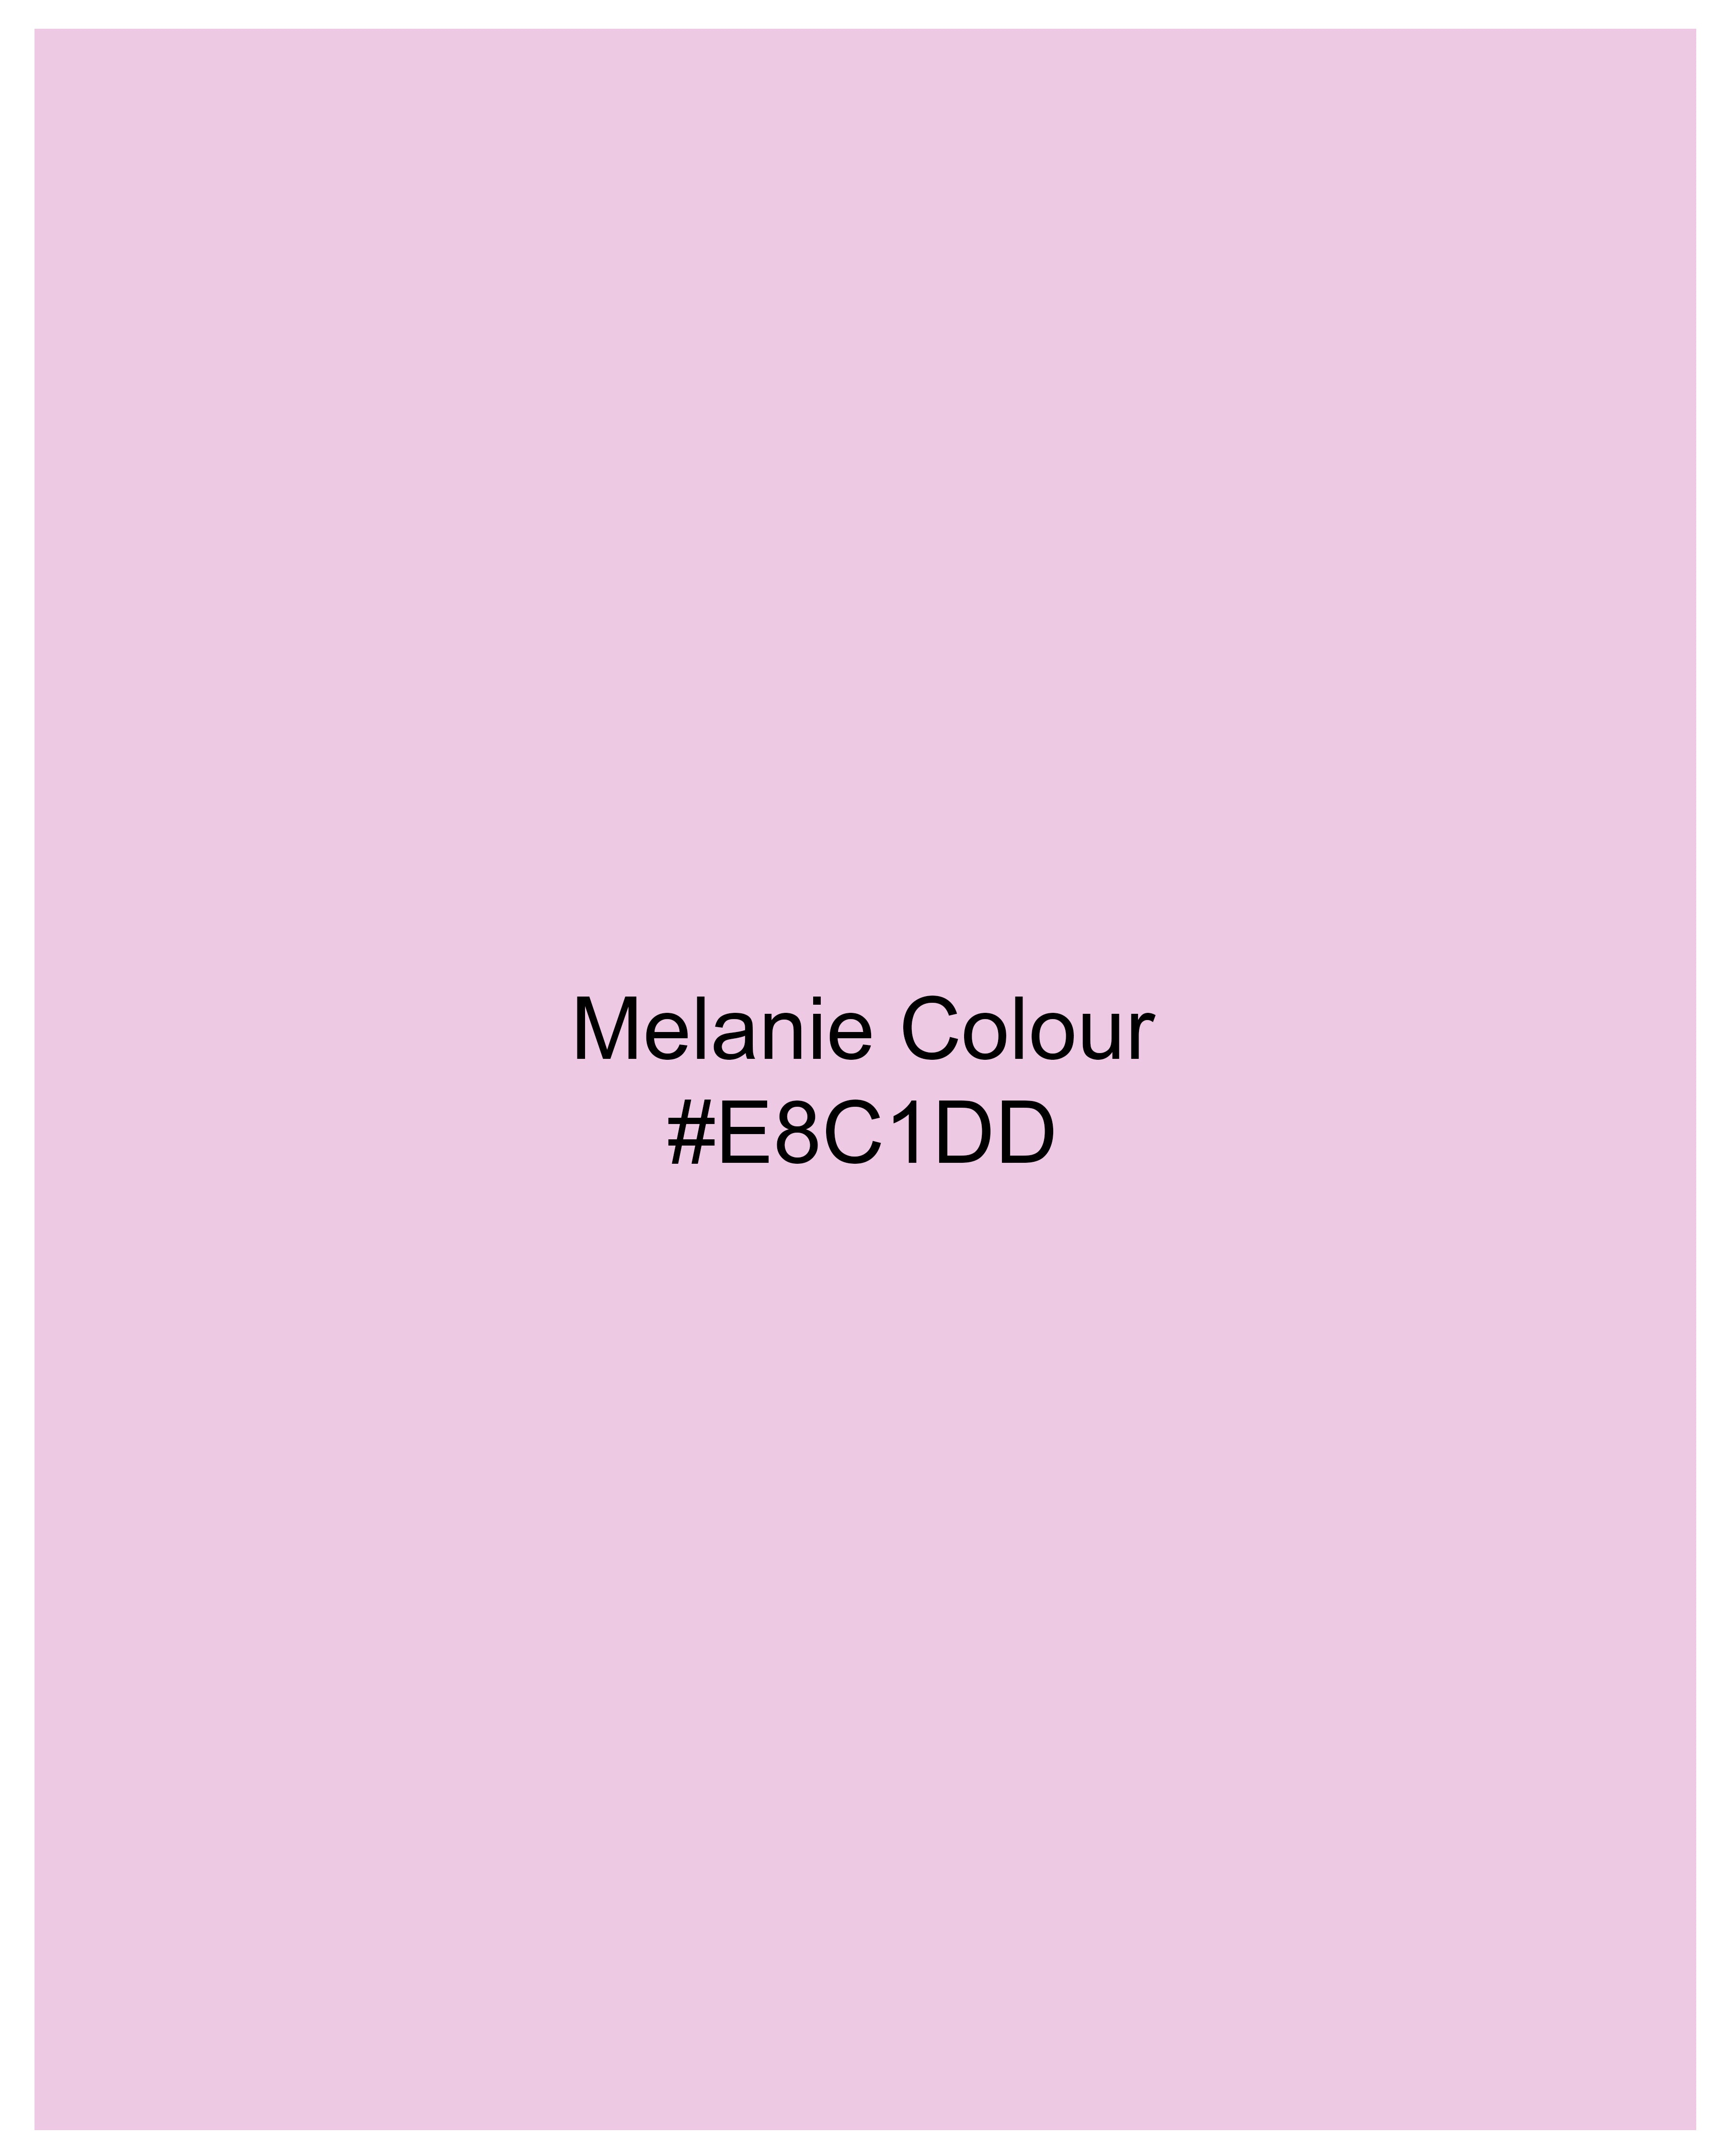 Melanie Pink Premium Cotton Shirt 9753-CA-38, 9753-CA-H-38, 9753-CA-39, 9753-CA-H-39, 9753-CA-40, 9753-CA-H-40, 9753-CA-42, 9753-CA-H-42, 9753-CA-44, 9753-CA-H-44, 9753-CA-46, 9753-CA-H-46, 9753-CA-48, 9753-CA-H-48, 9753-CA-50, 9753-CA-H-50, 9753-CA-52, 9753-CA-H-52